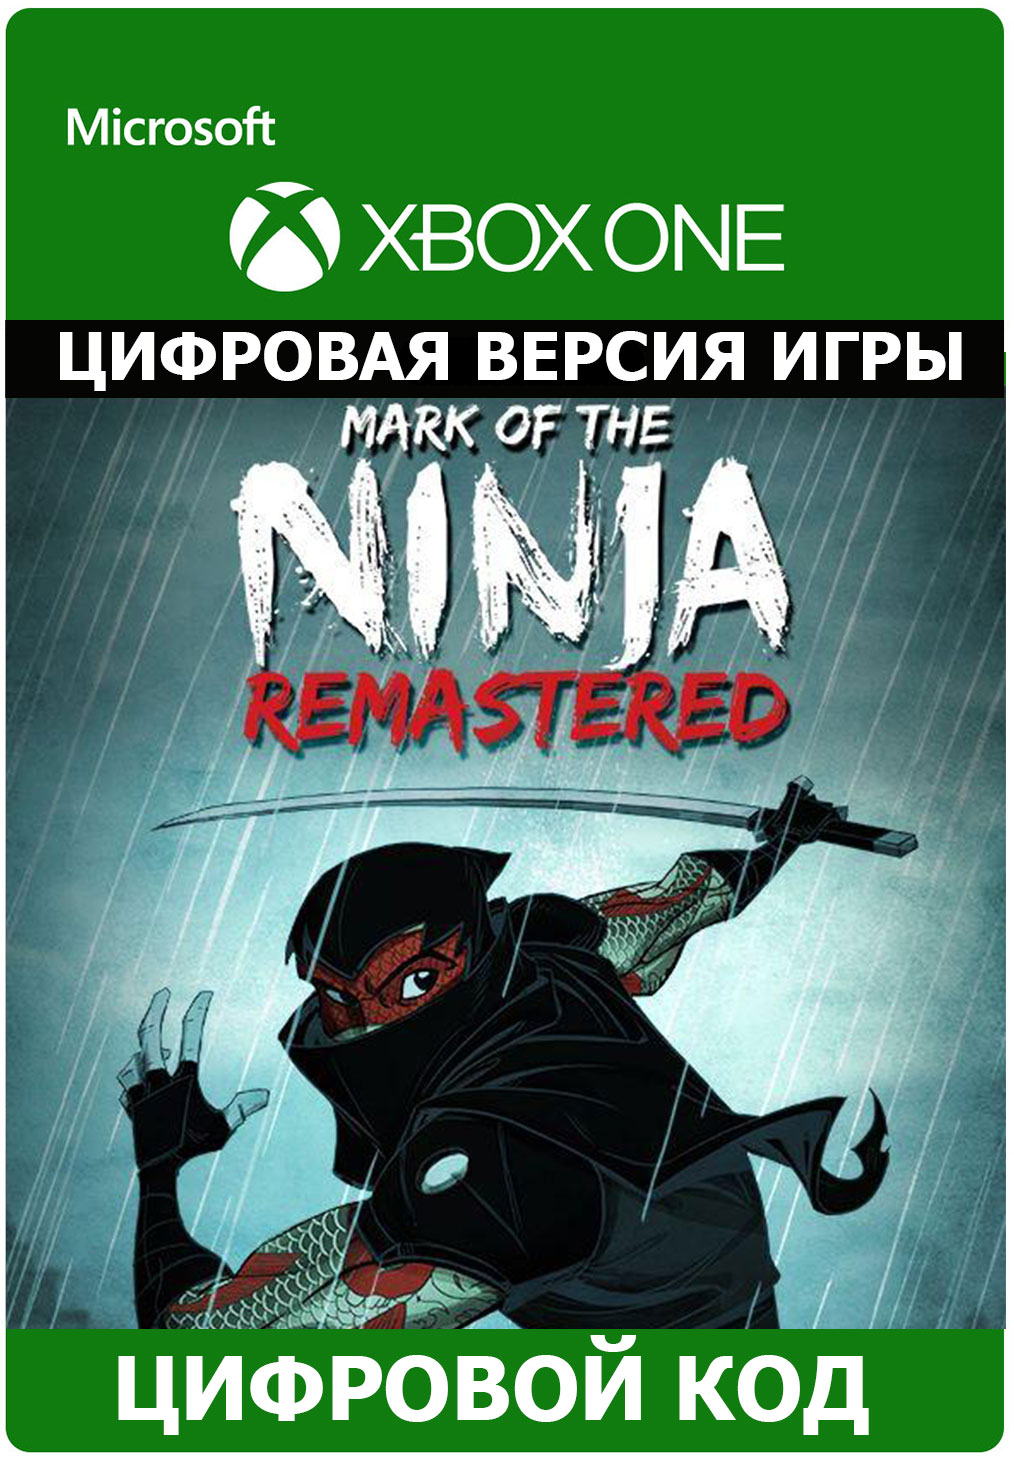 download free mark of the ninja xbox one